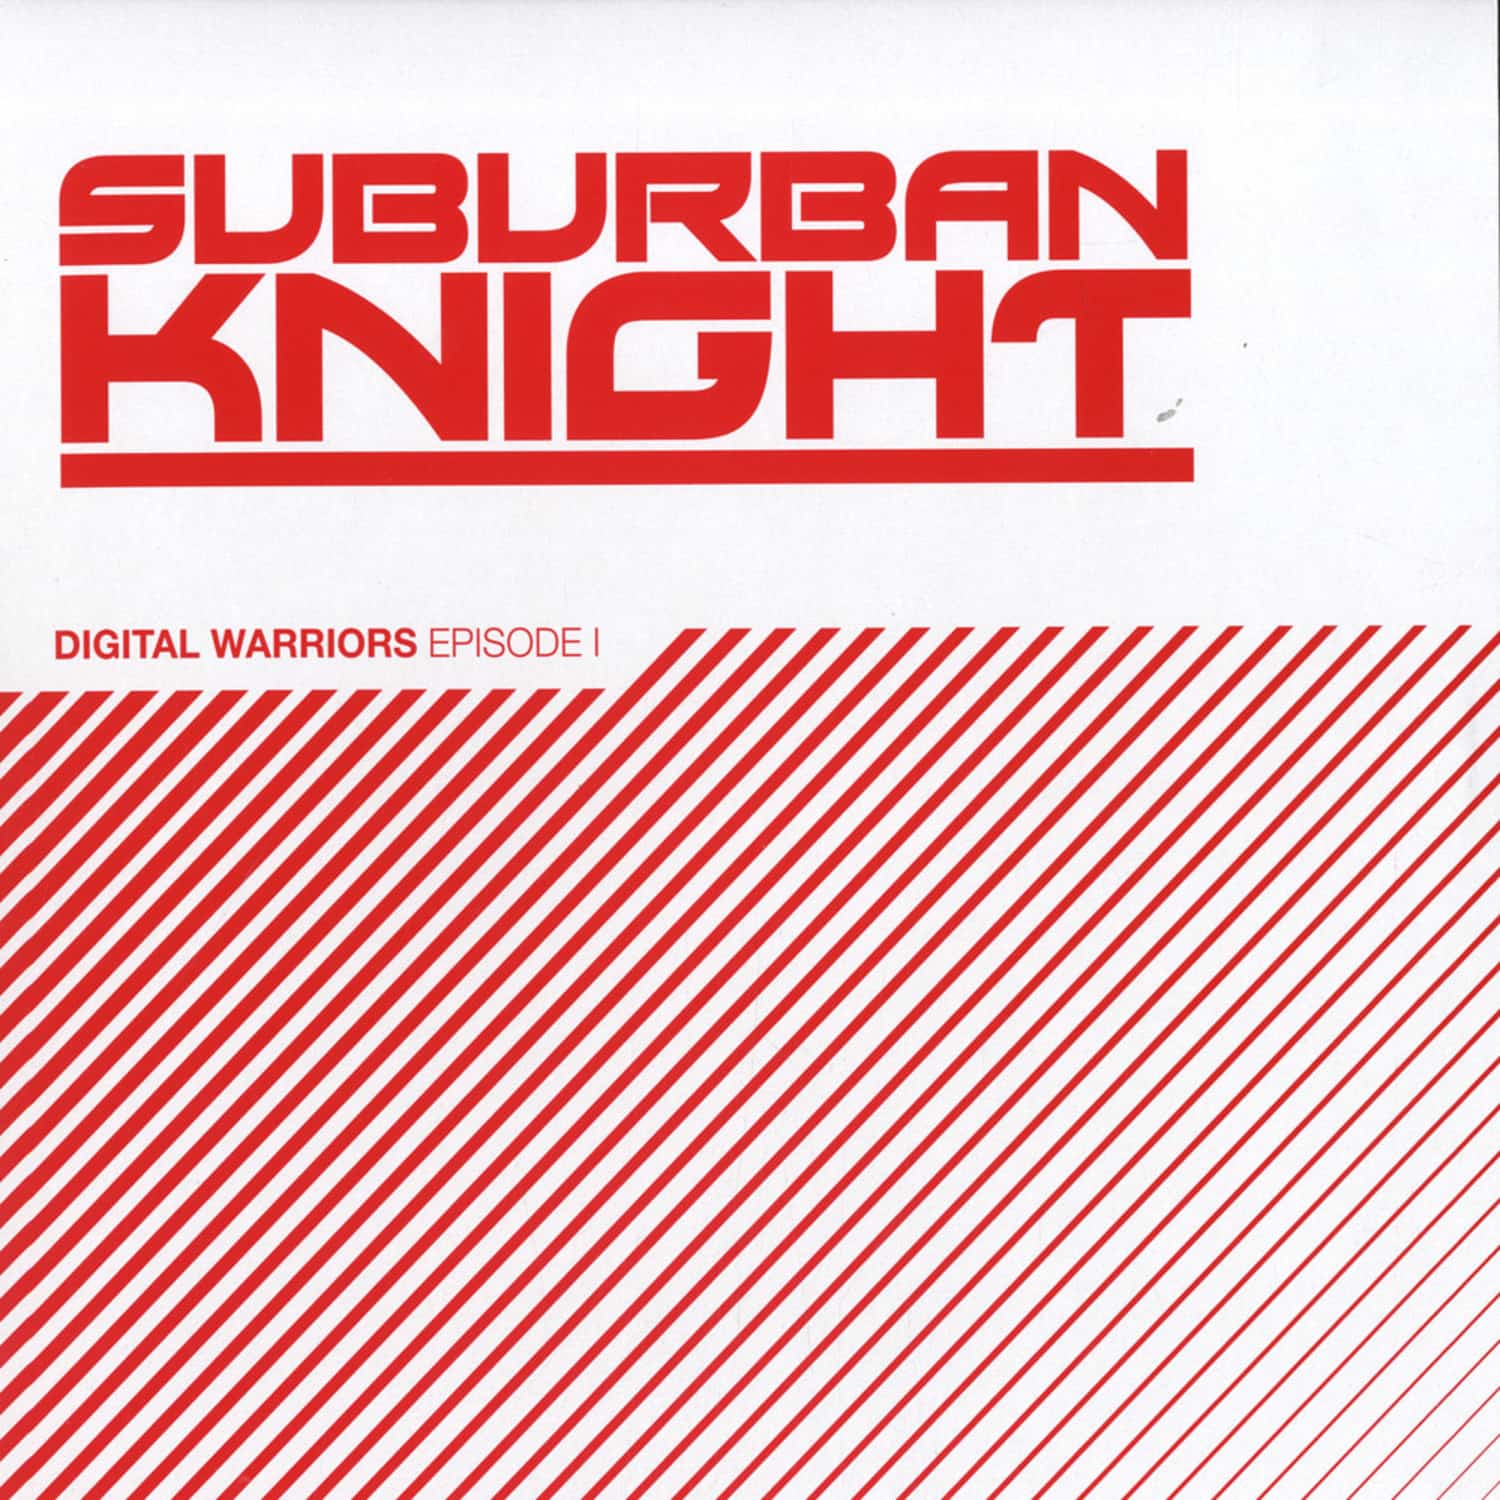 Suburban Knight - DIGITAL WARRIORS EPISODE 1